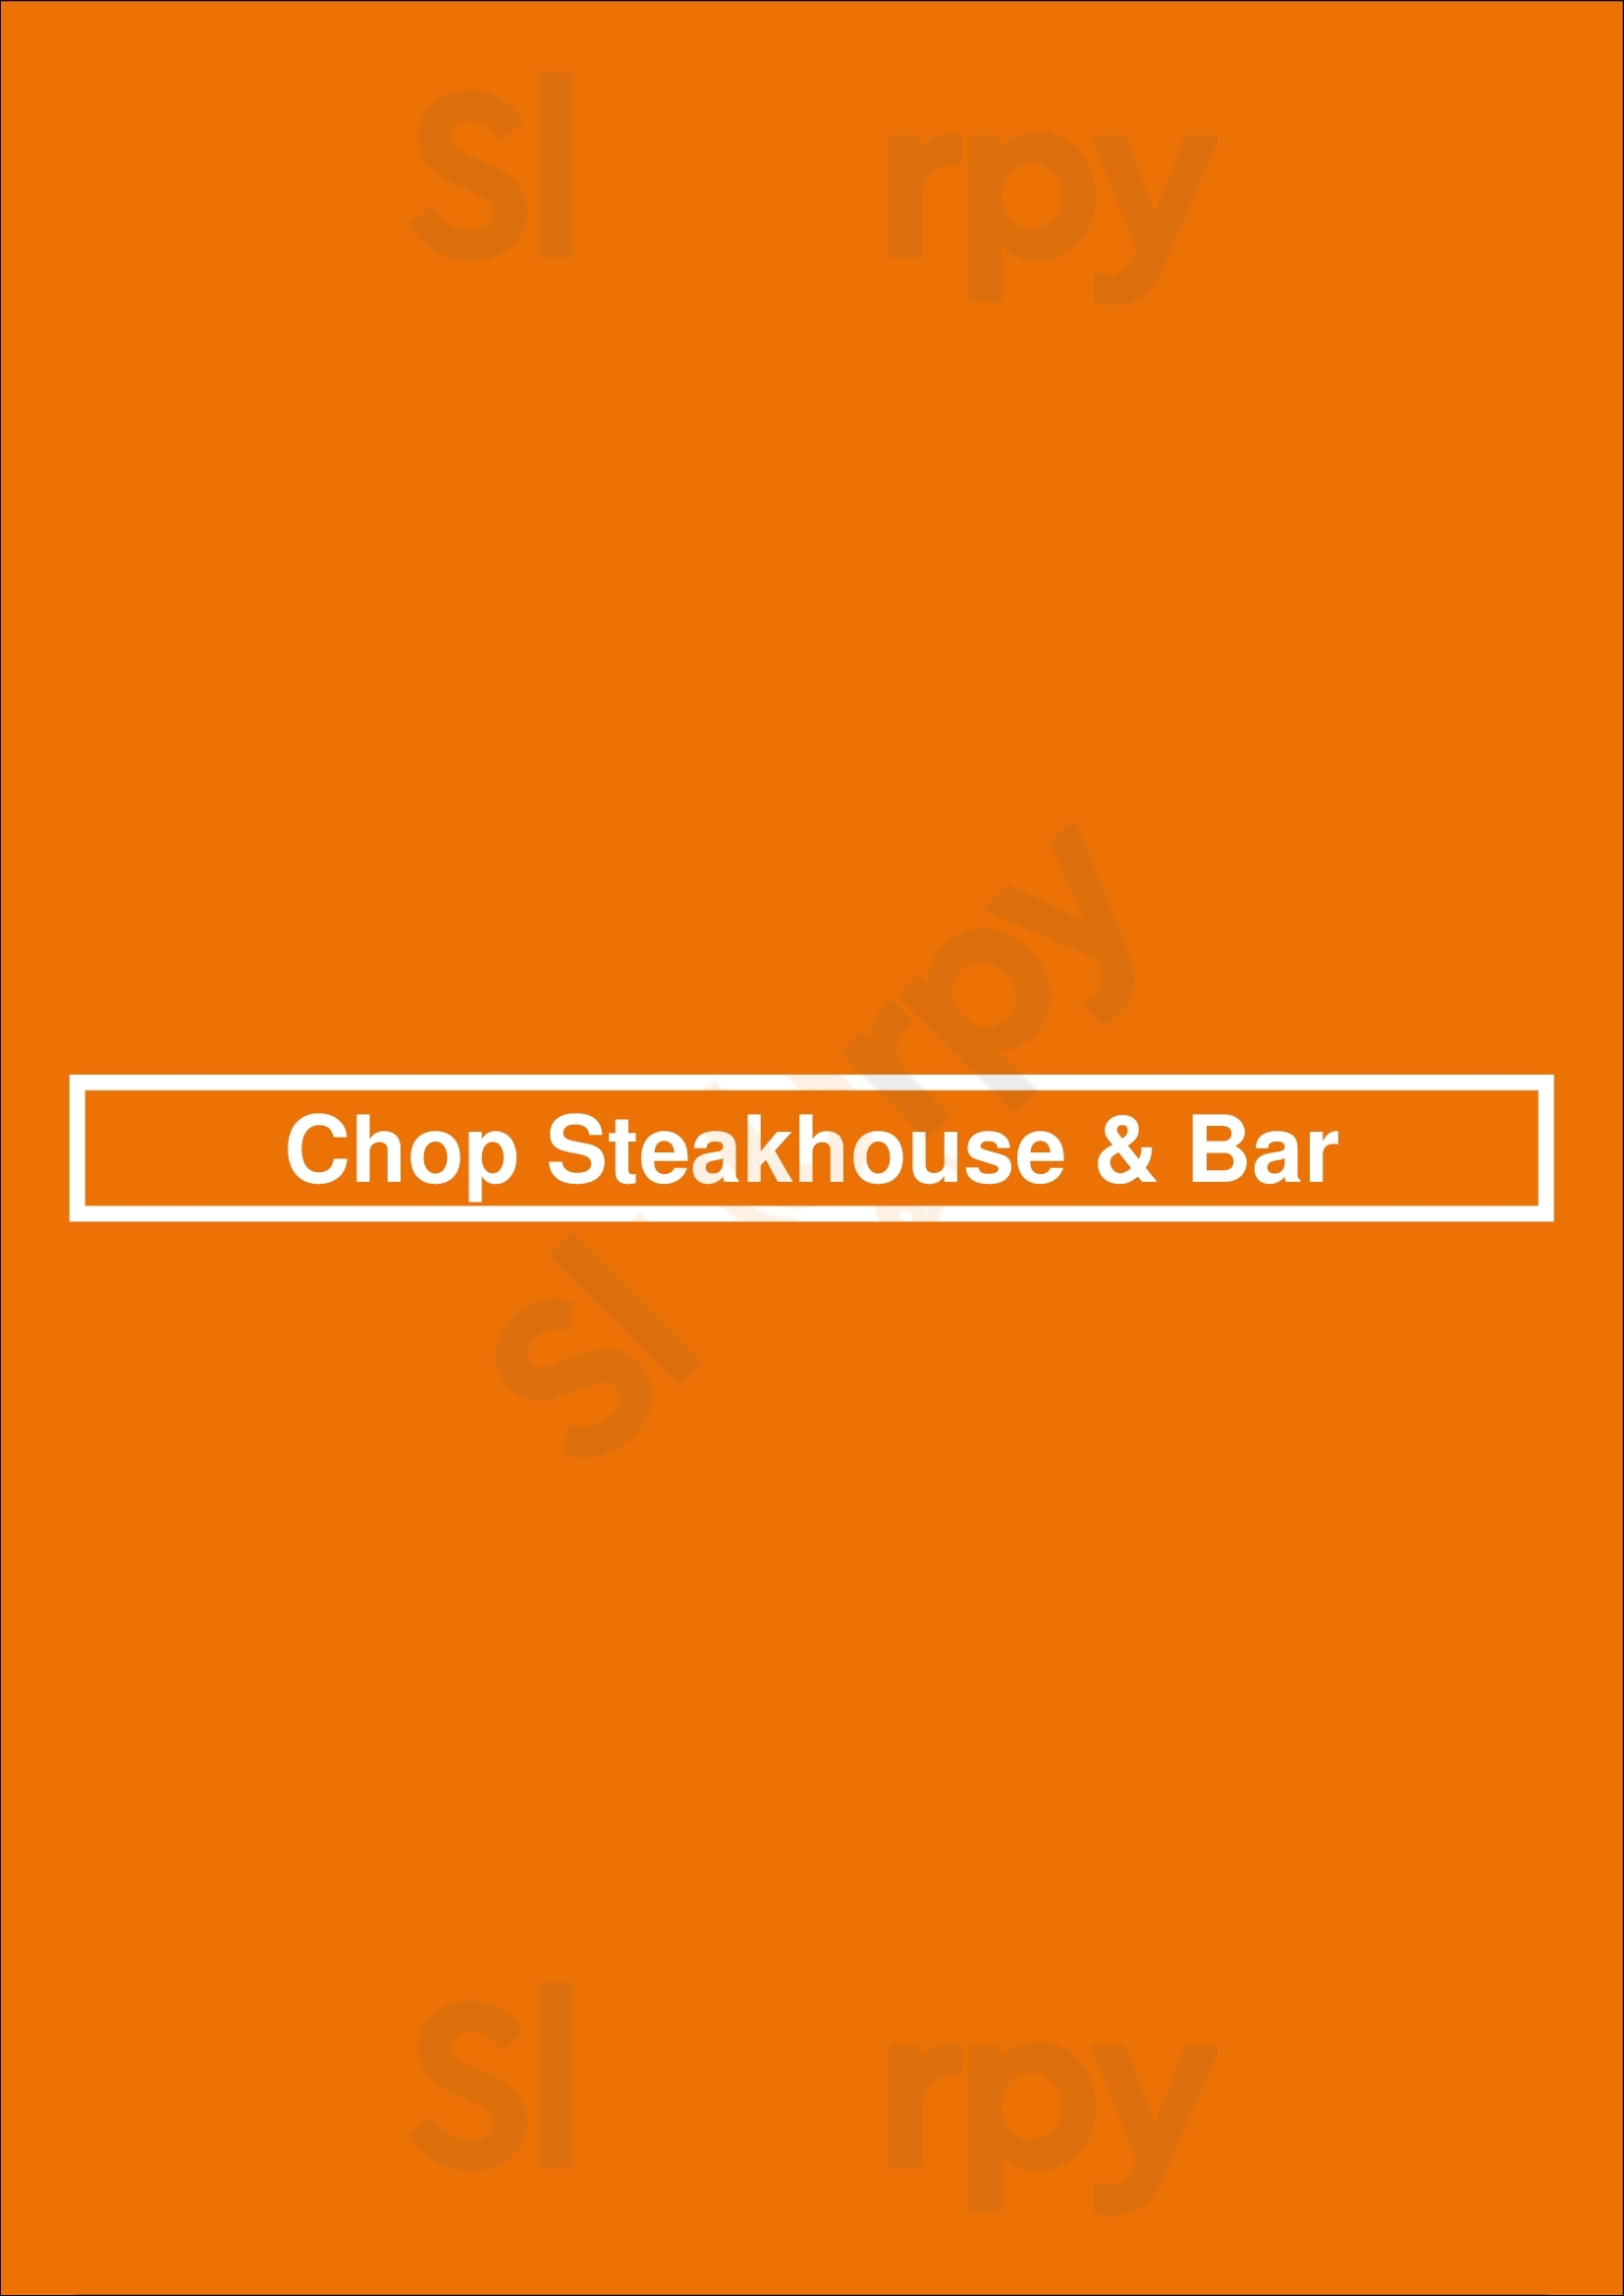 Chop Steakhouse & Bar Mississauga Menu - 1